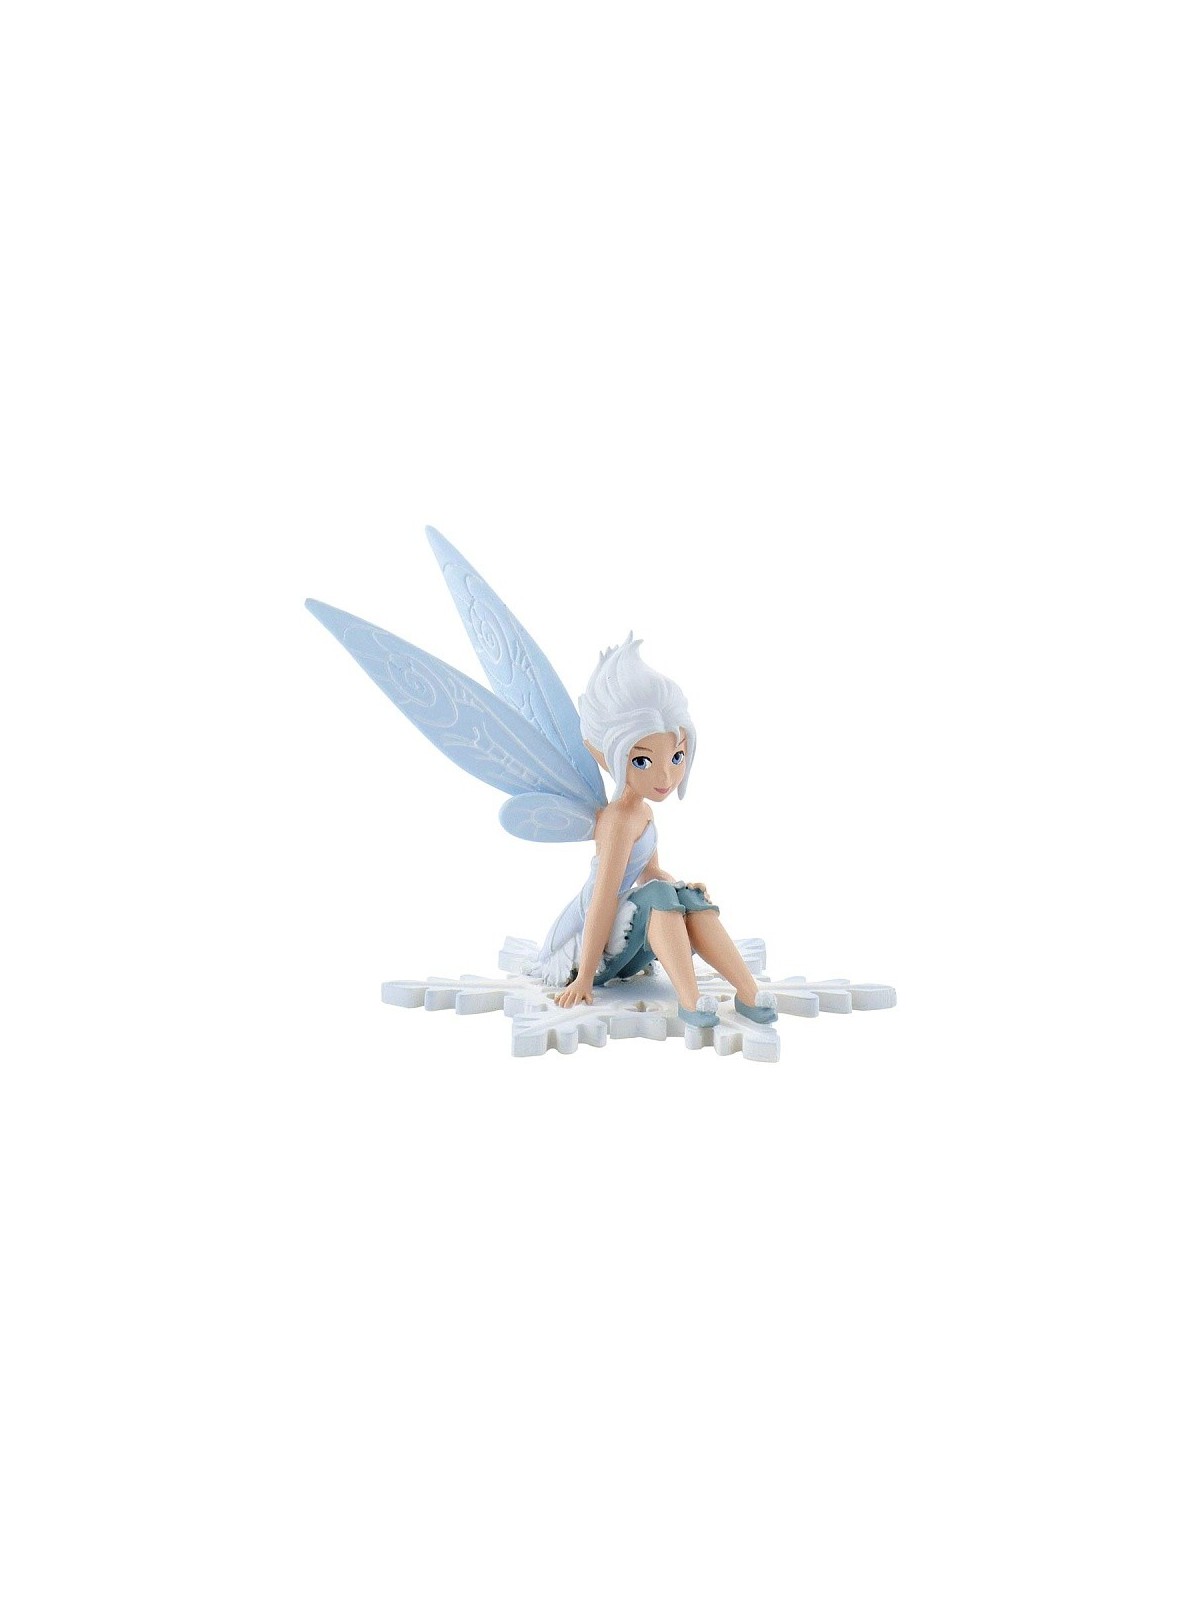 Disney Figure - Periwinkle  - Tinker Bell